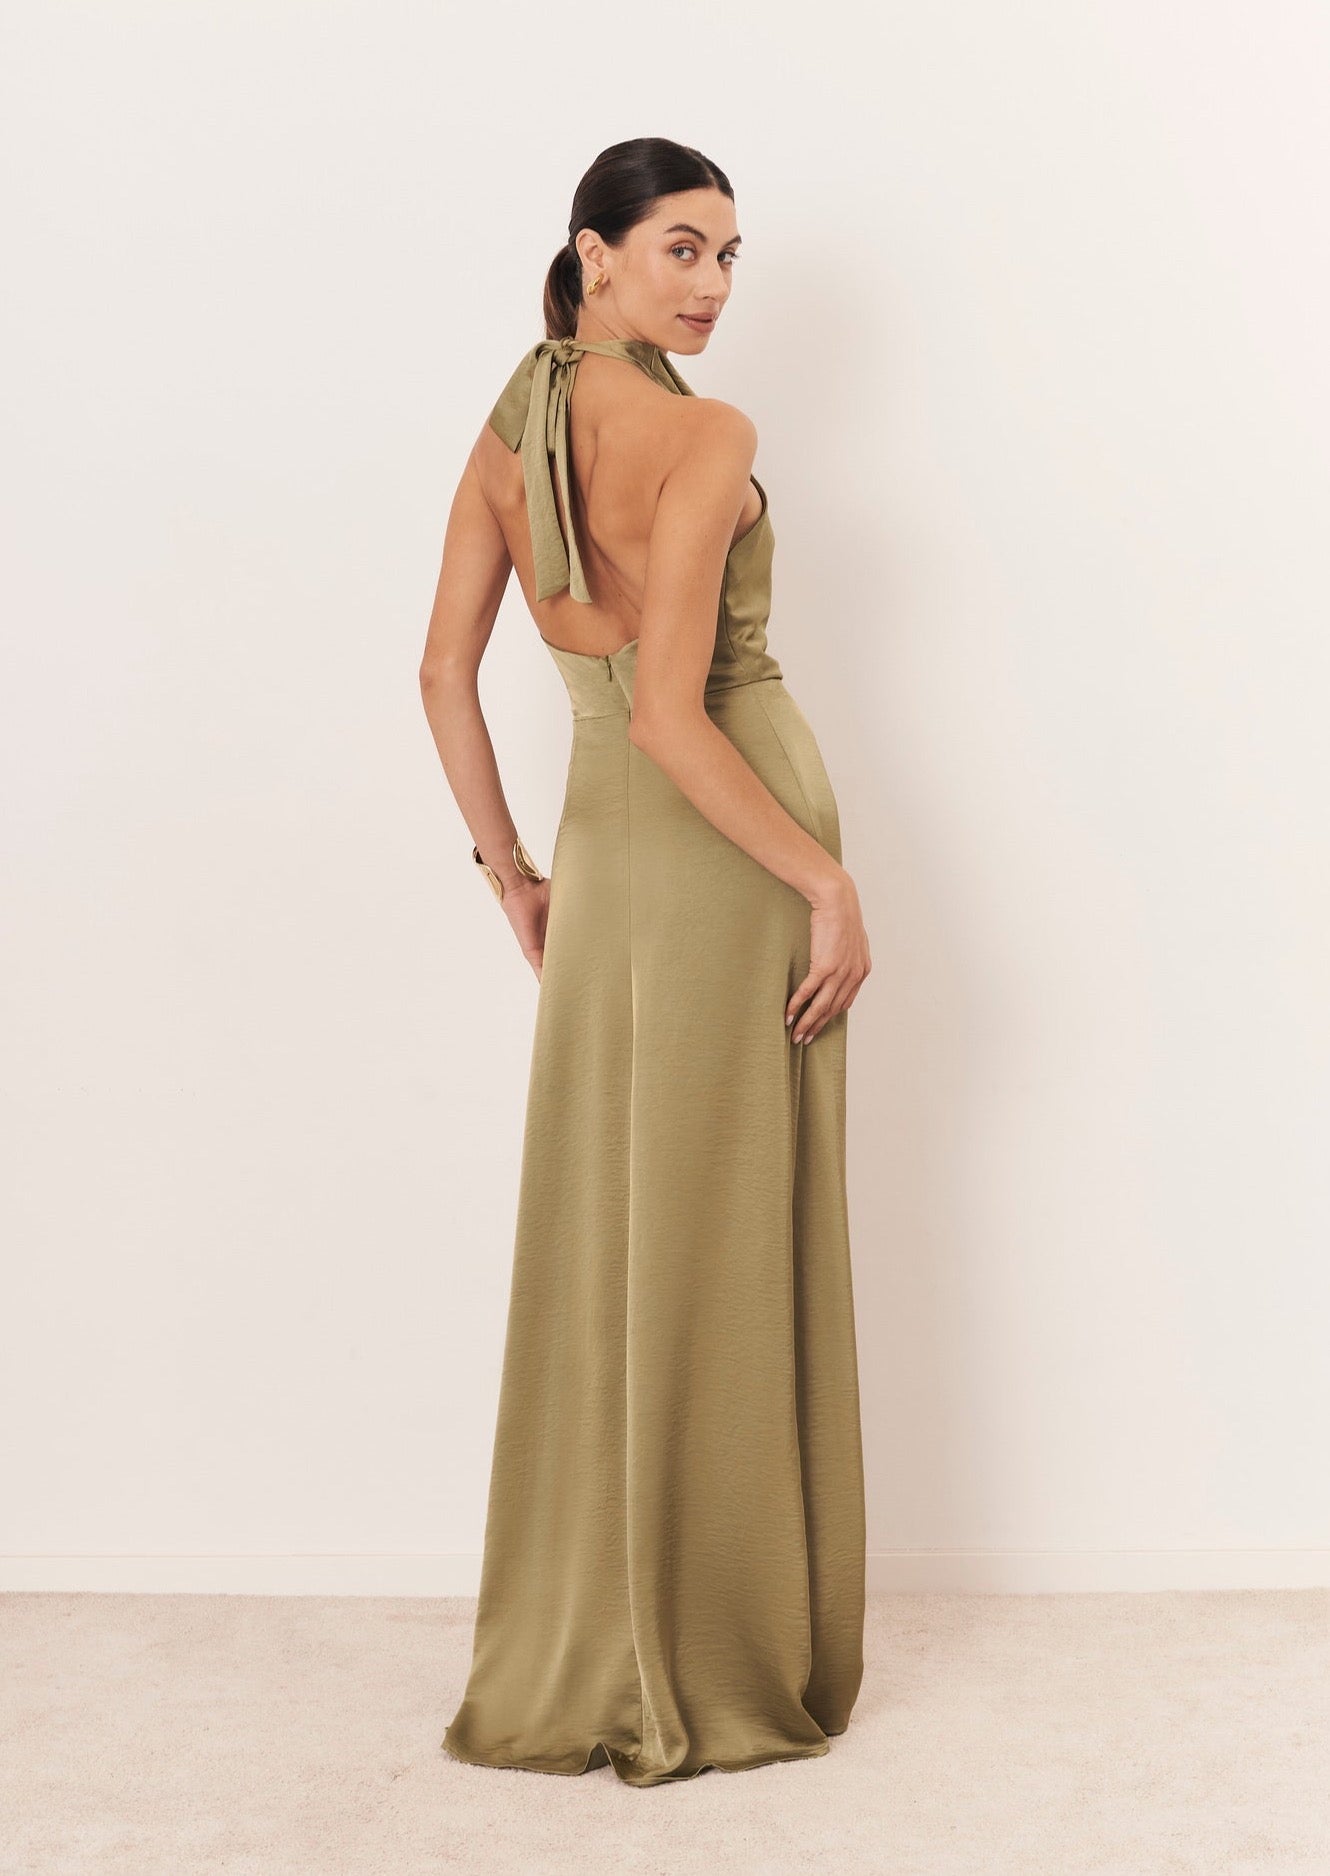 Olive green Athena dress